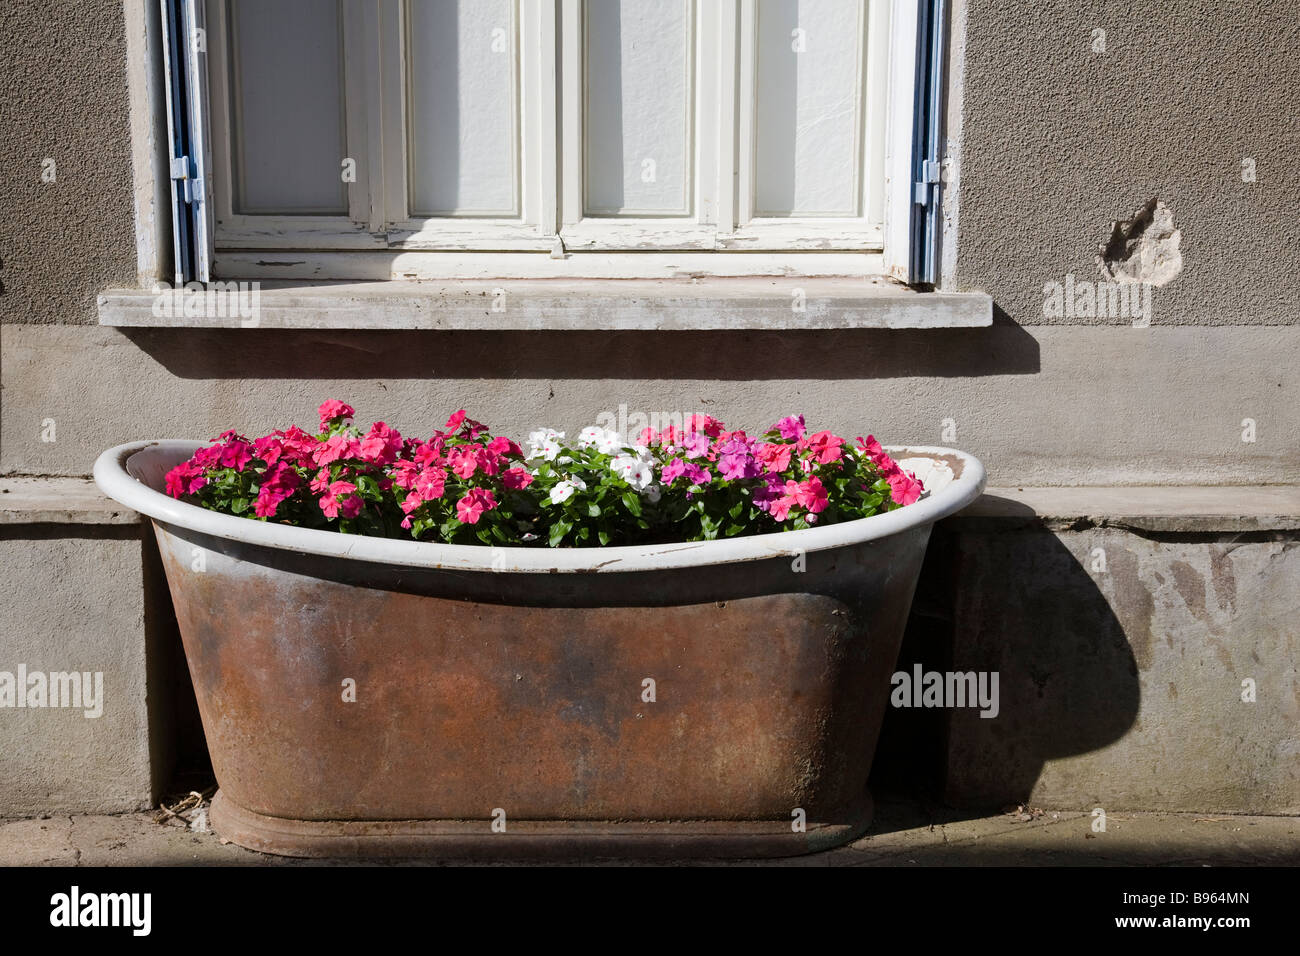 An old bath being used as a planter, Tournon d'agenais, France. Stock Photo